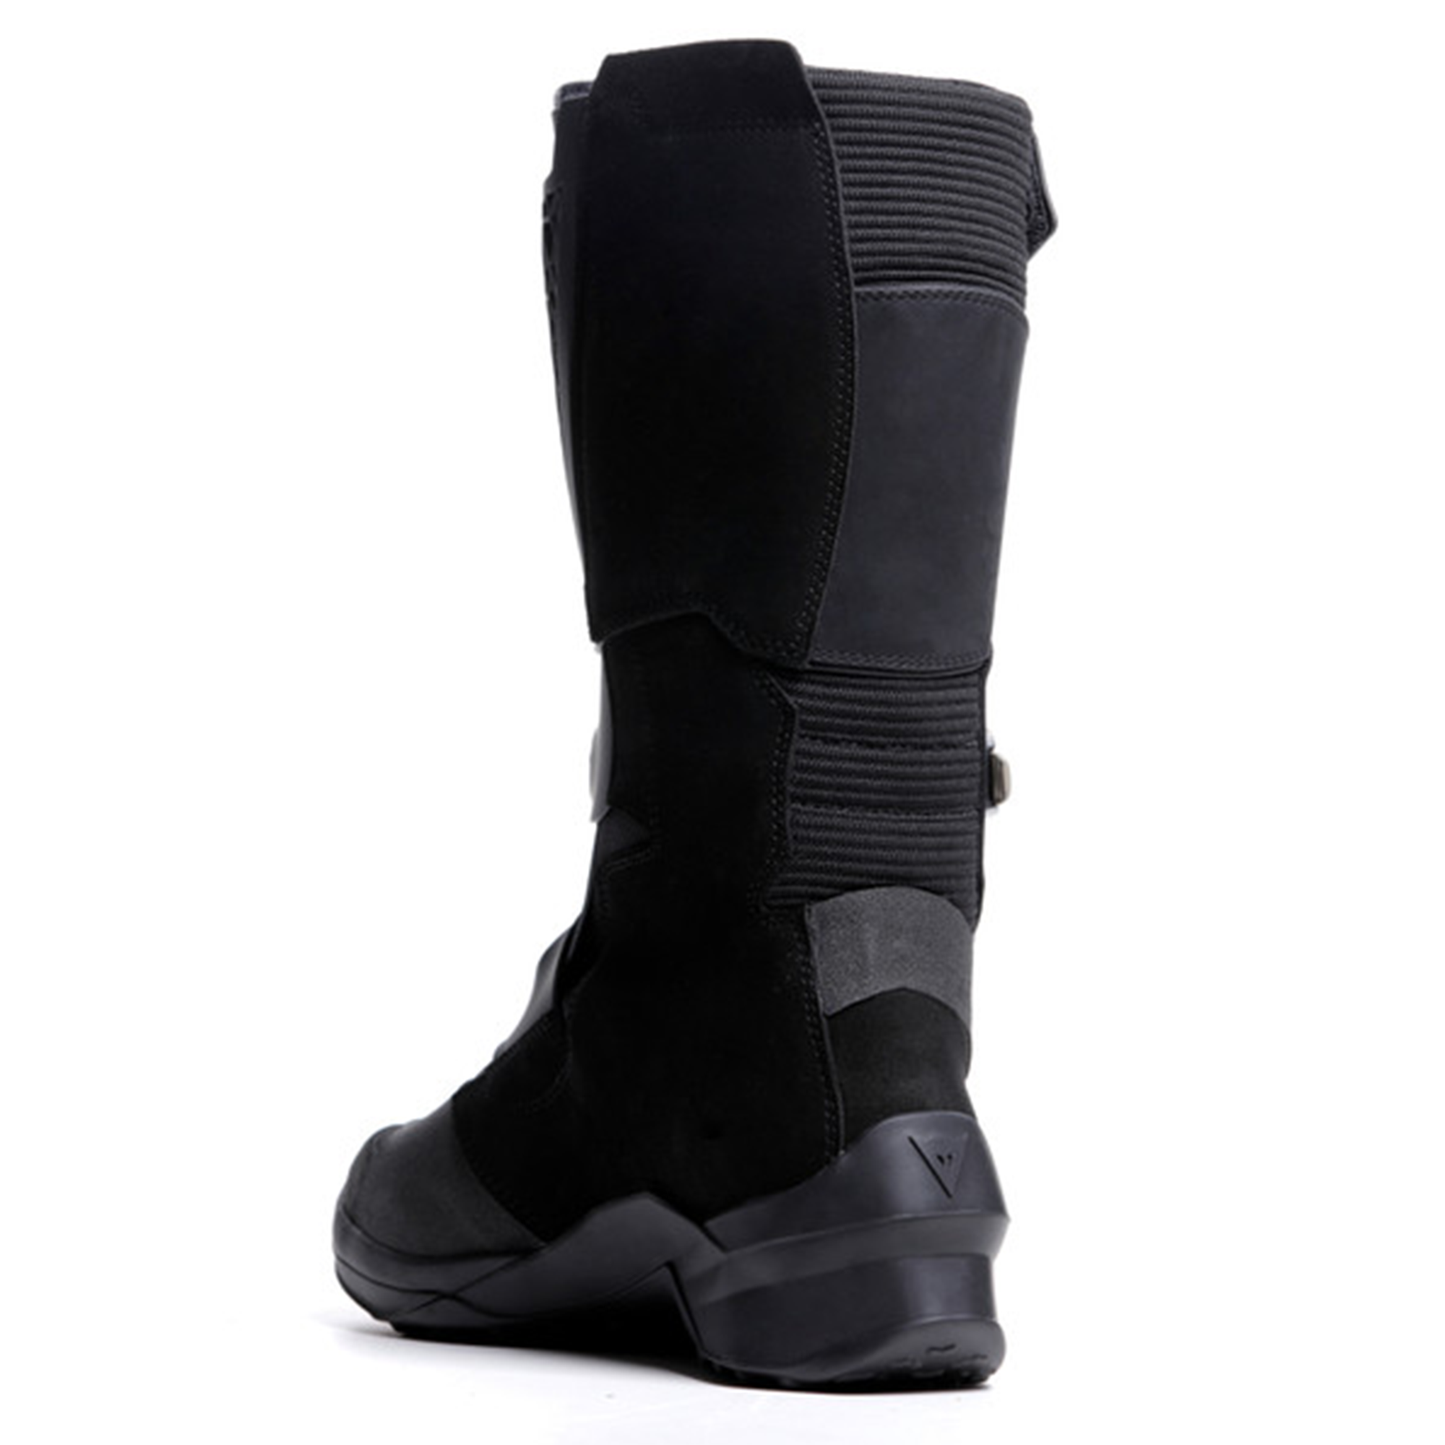 Dainese Seeker Gore-Tex Boots - Black (631)